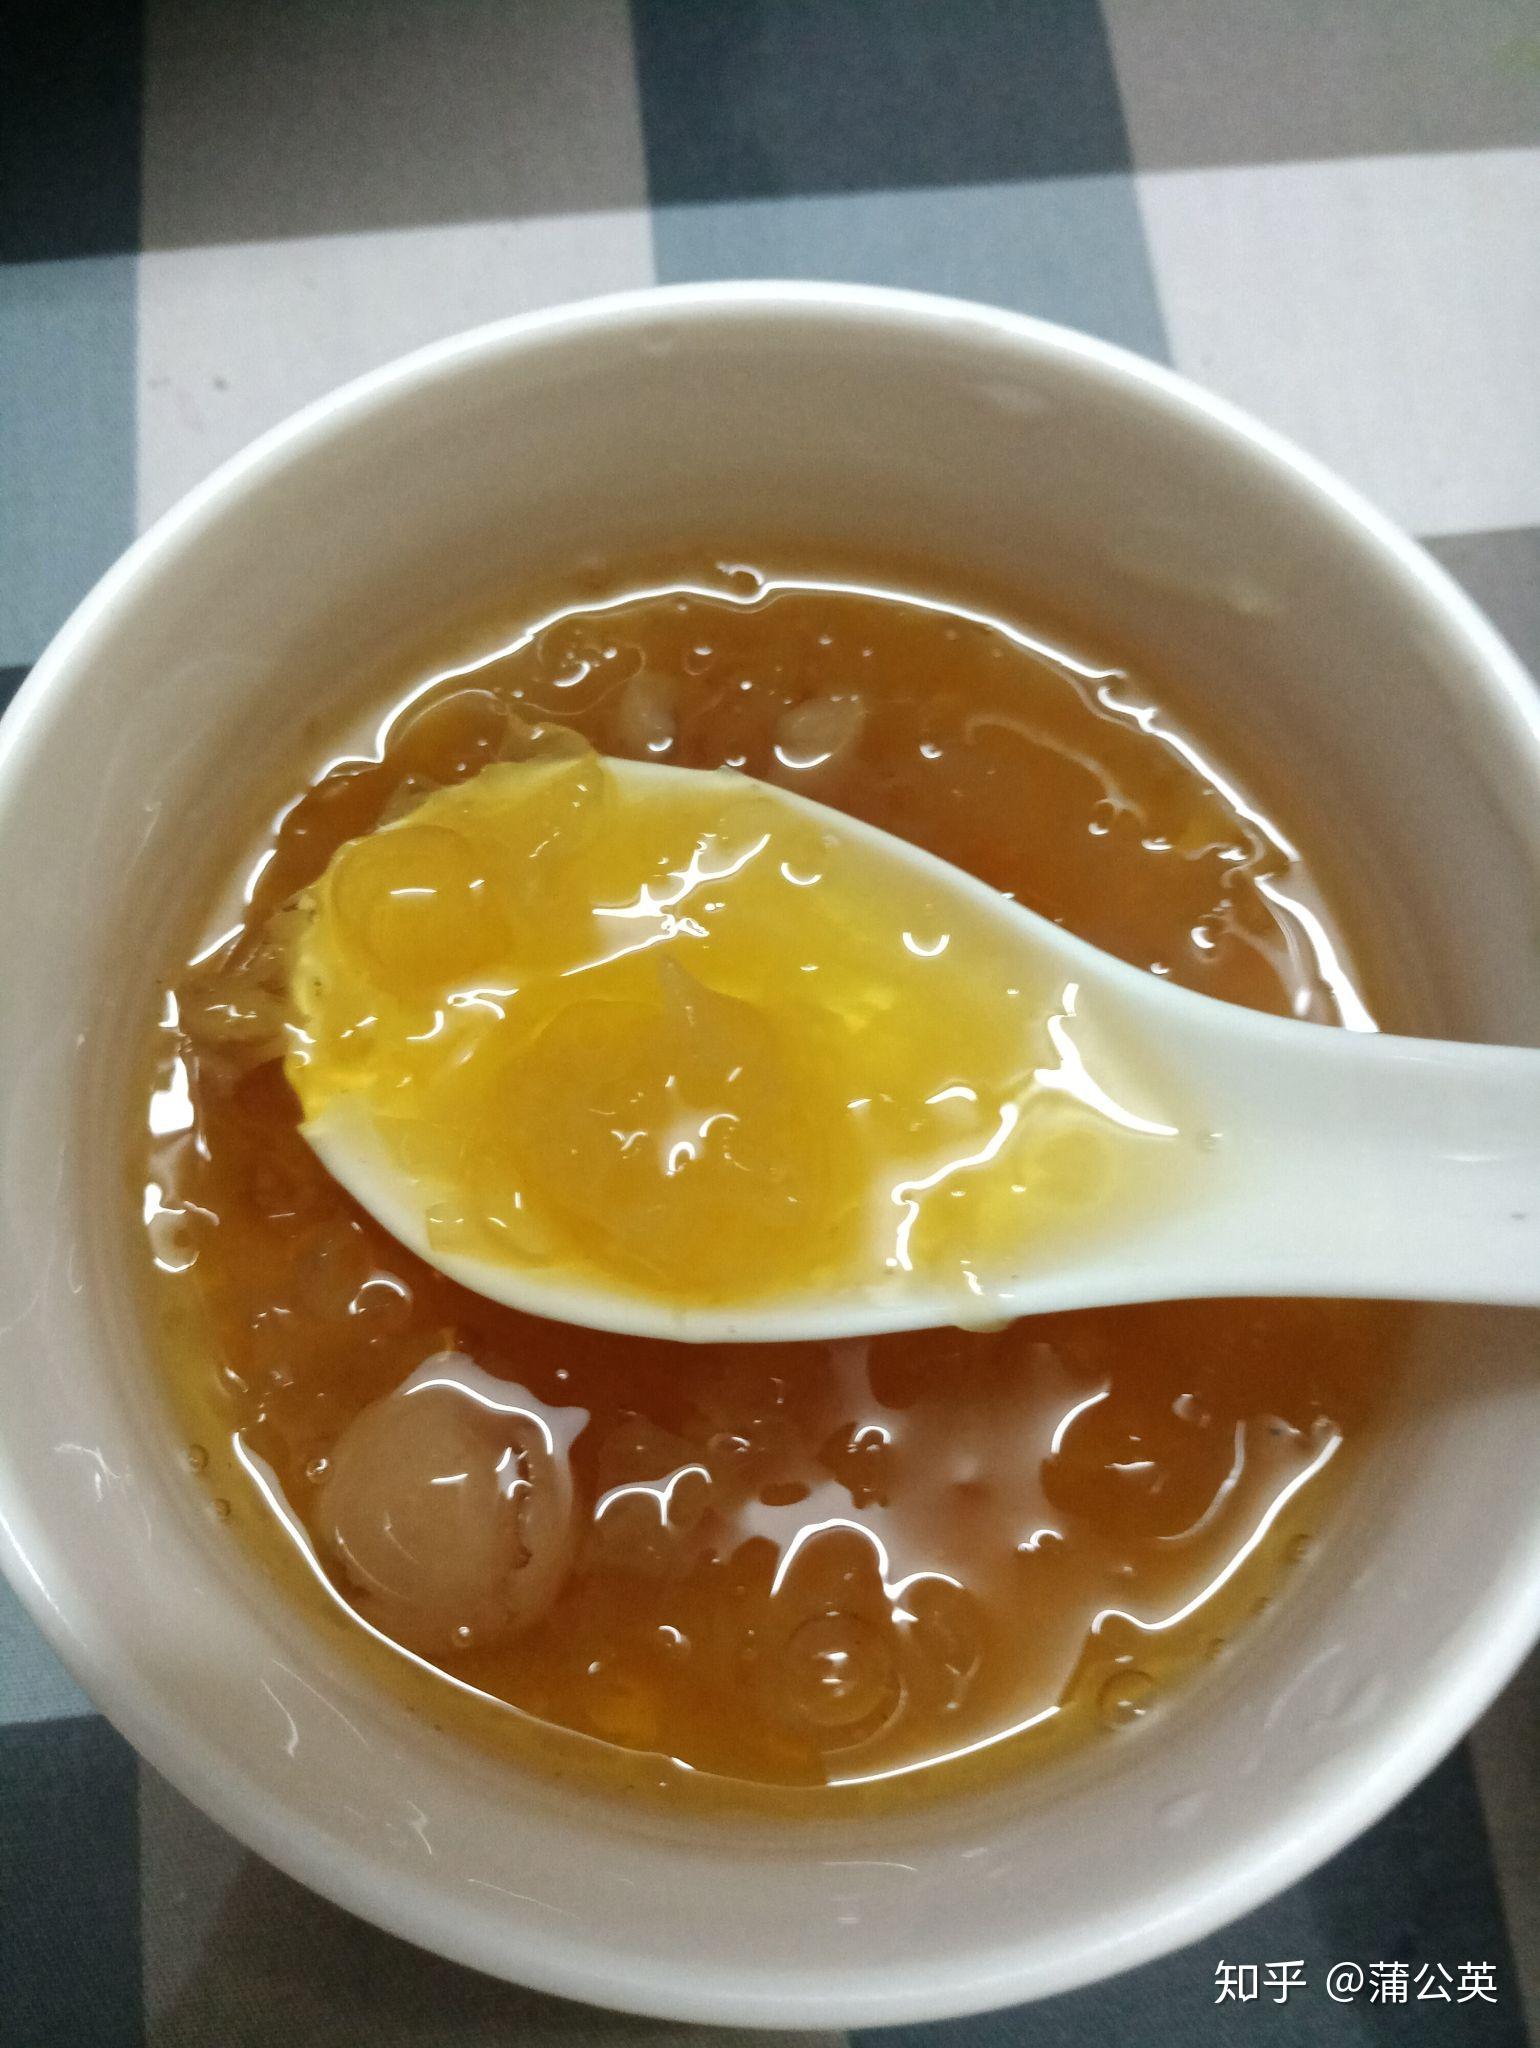 Easy Peach Gum & Snow Lotus Seed Dessert Soup Recipe (桃胶雪莲子糖水) - My Wok ...